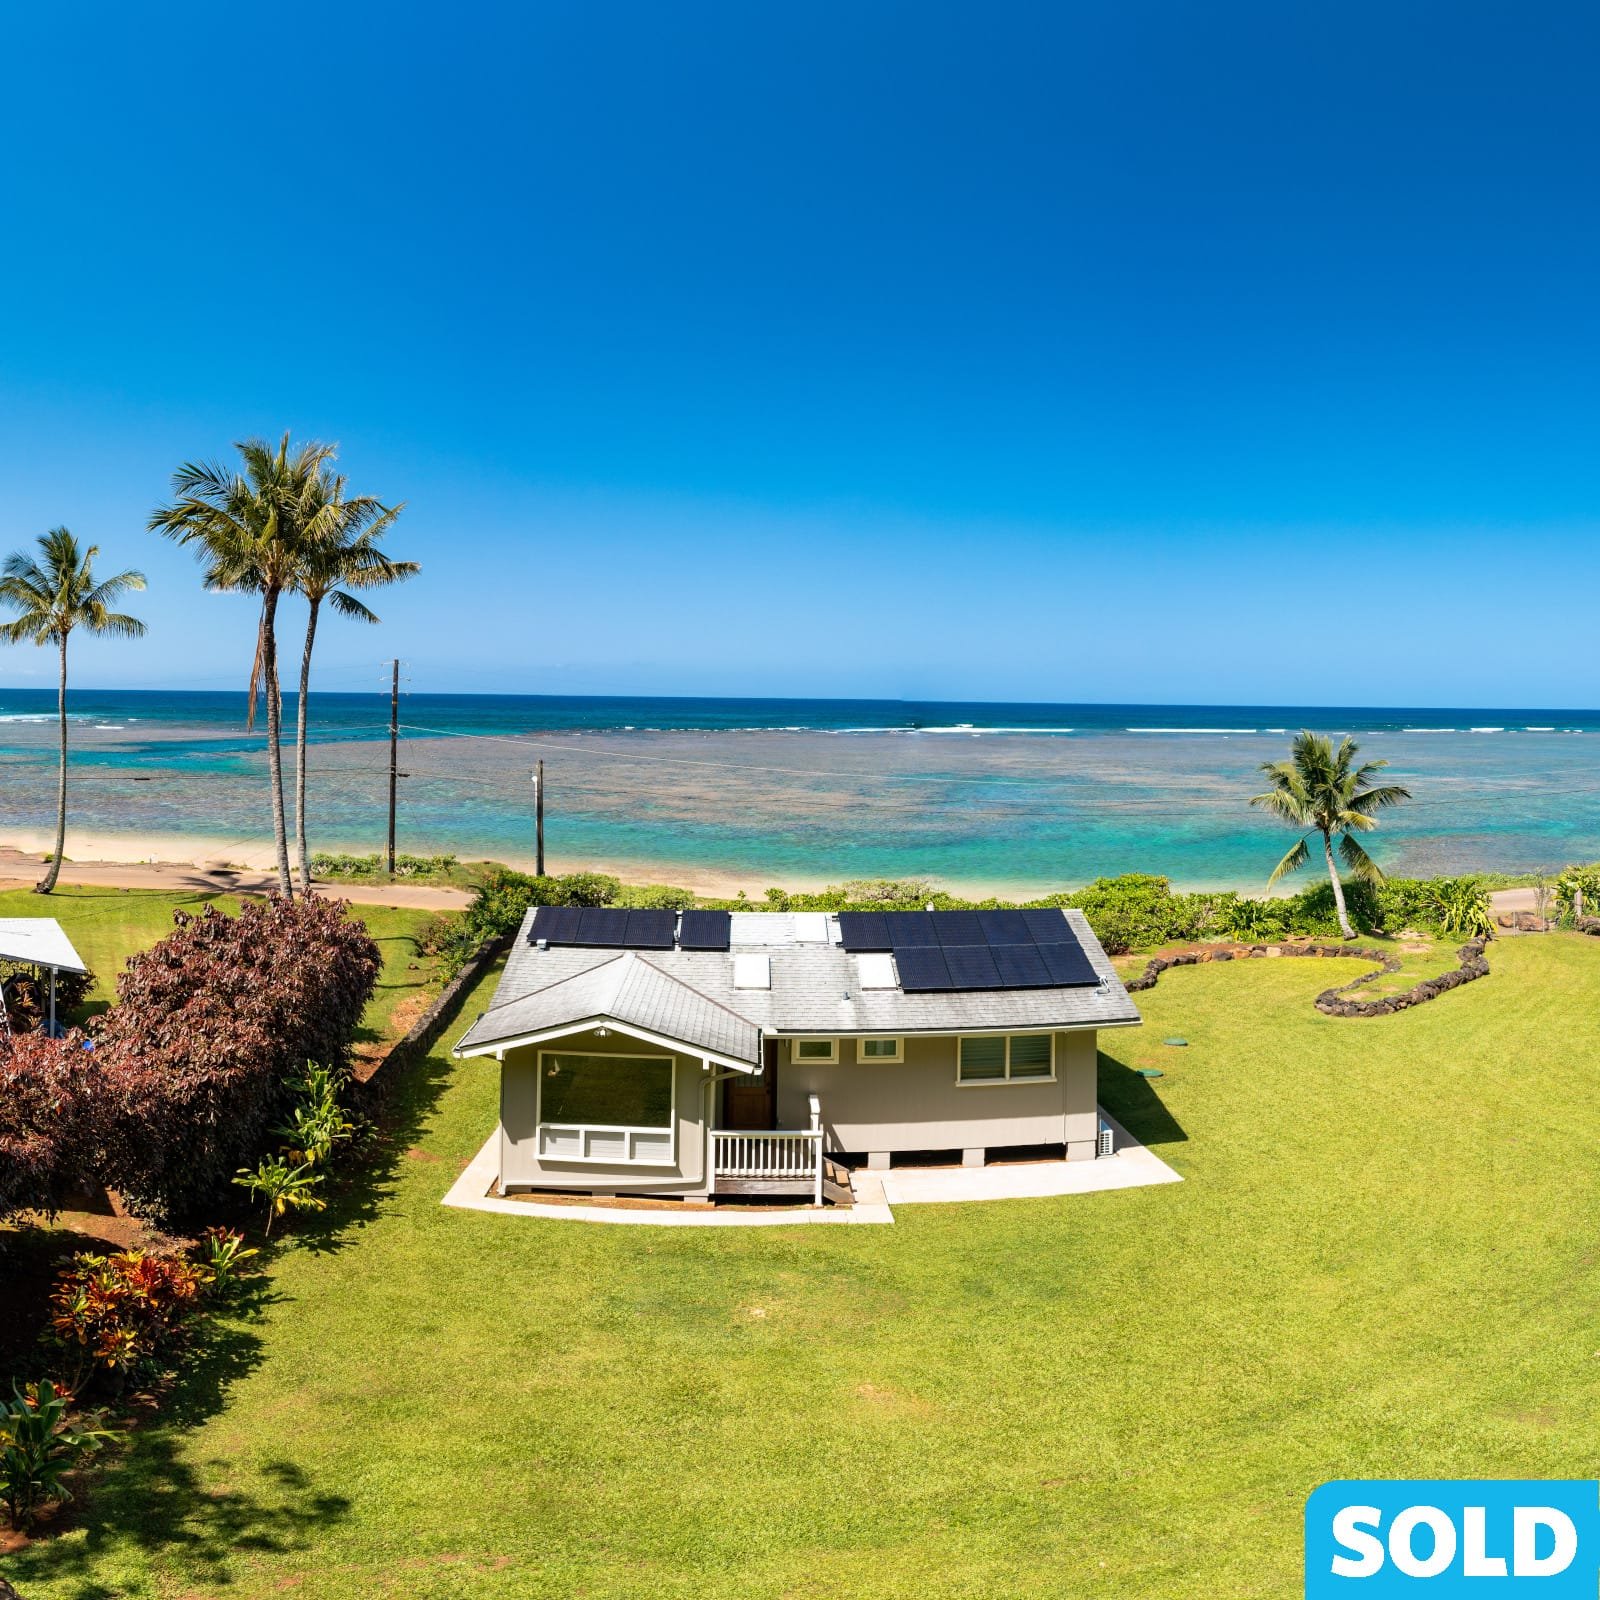 Anini Almost-Beachfront Cottage - $2.975M